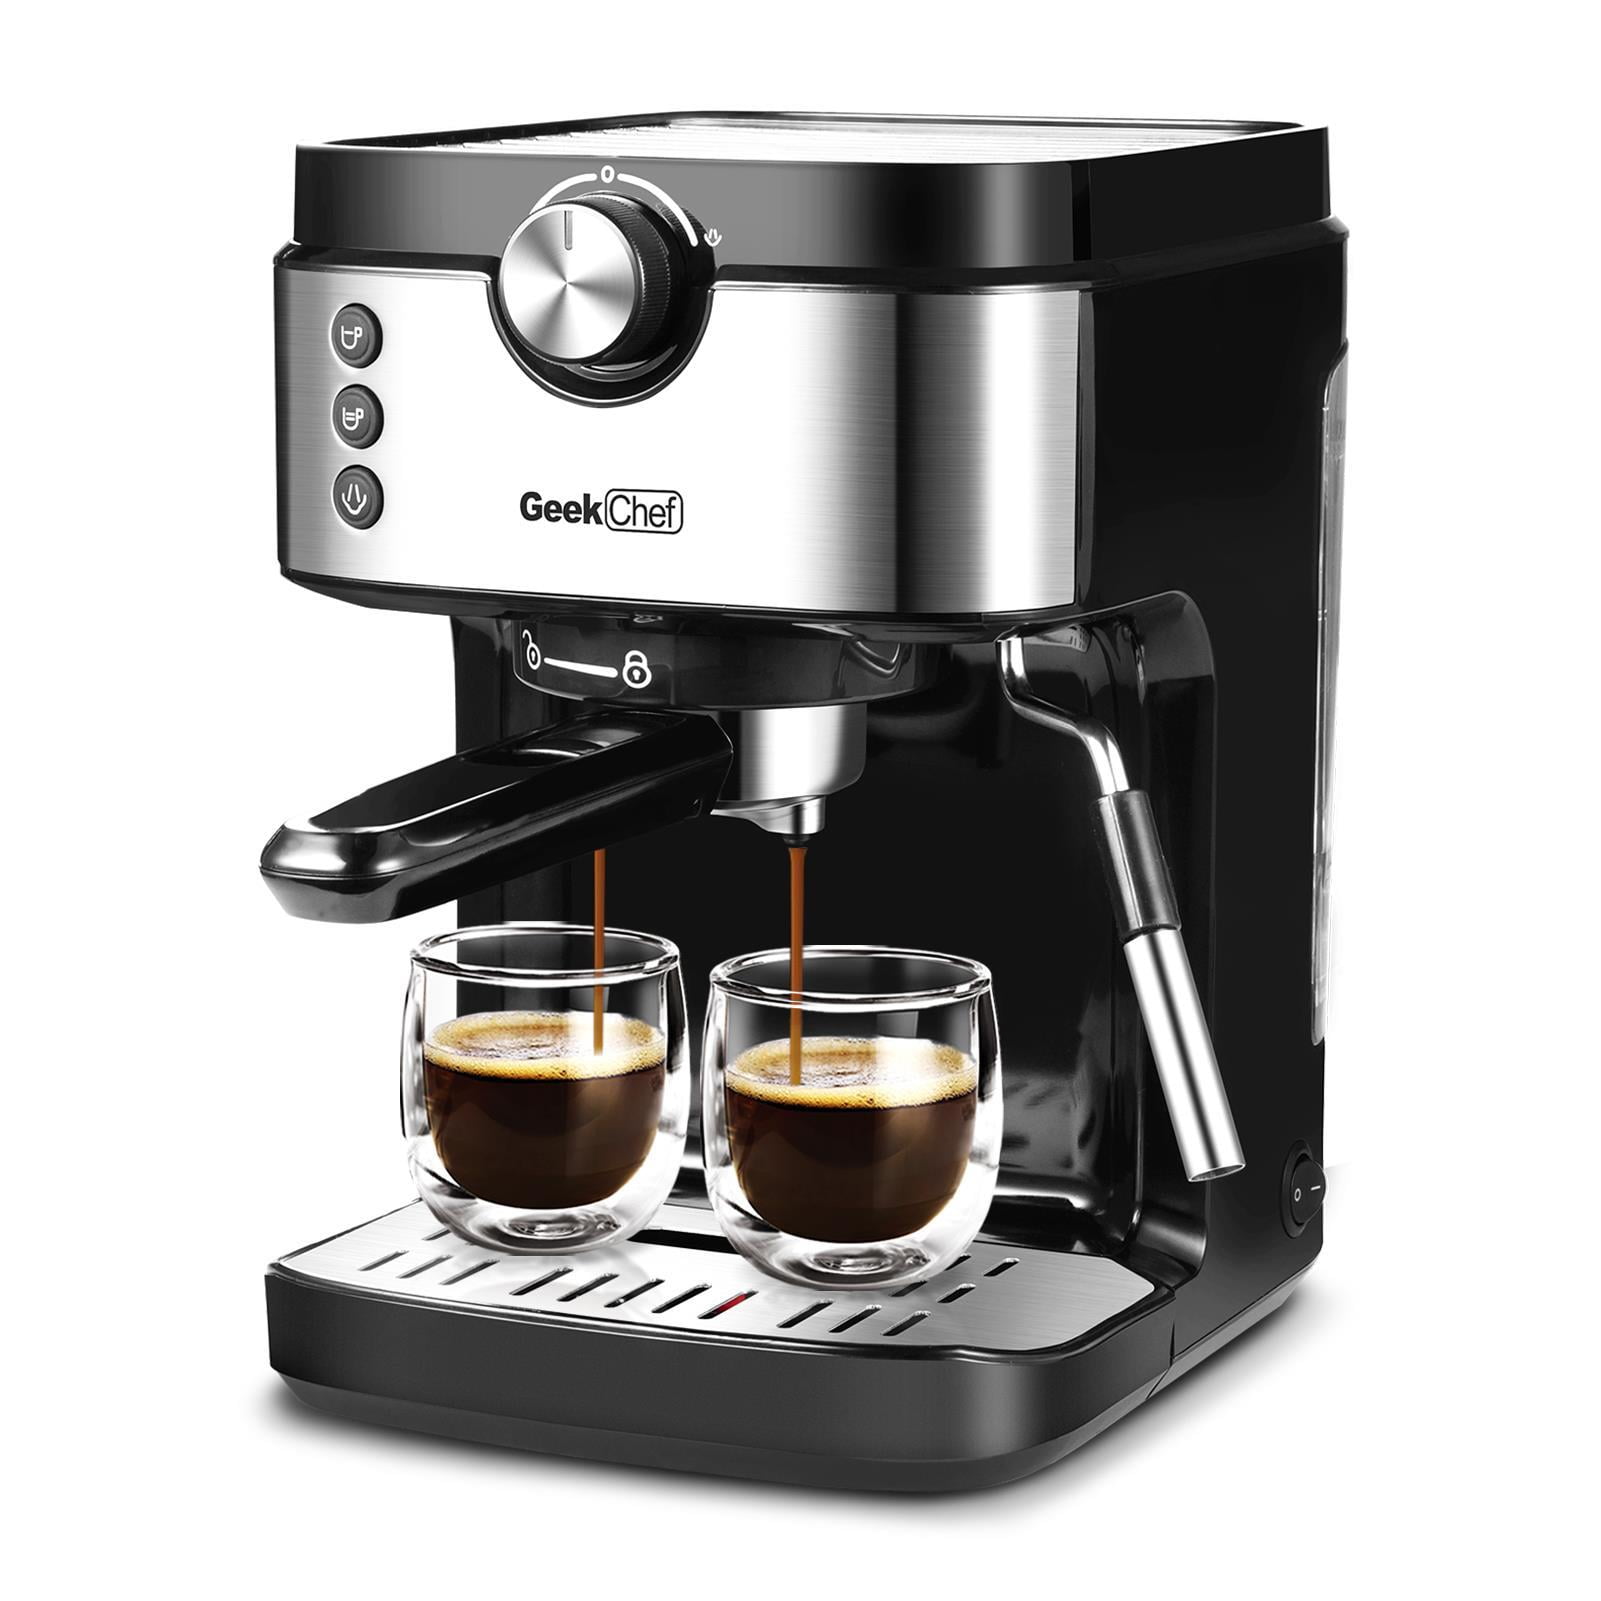 UbesGoo Espresso Machine,20 bar espresso machine with milk frother